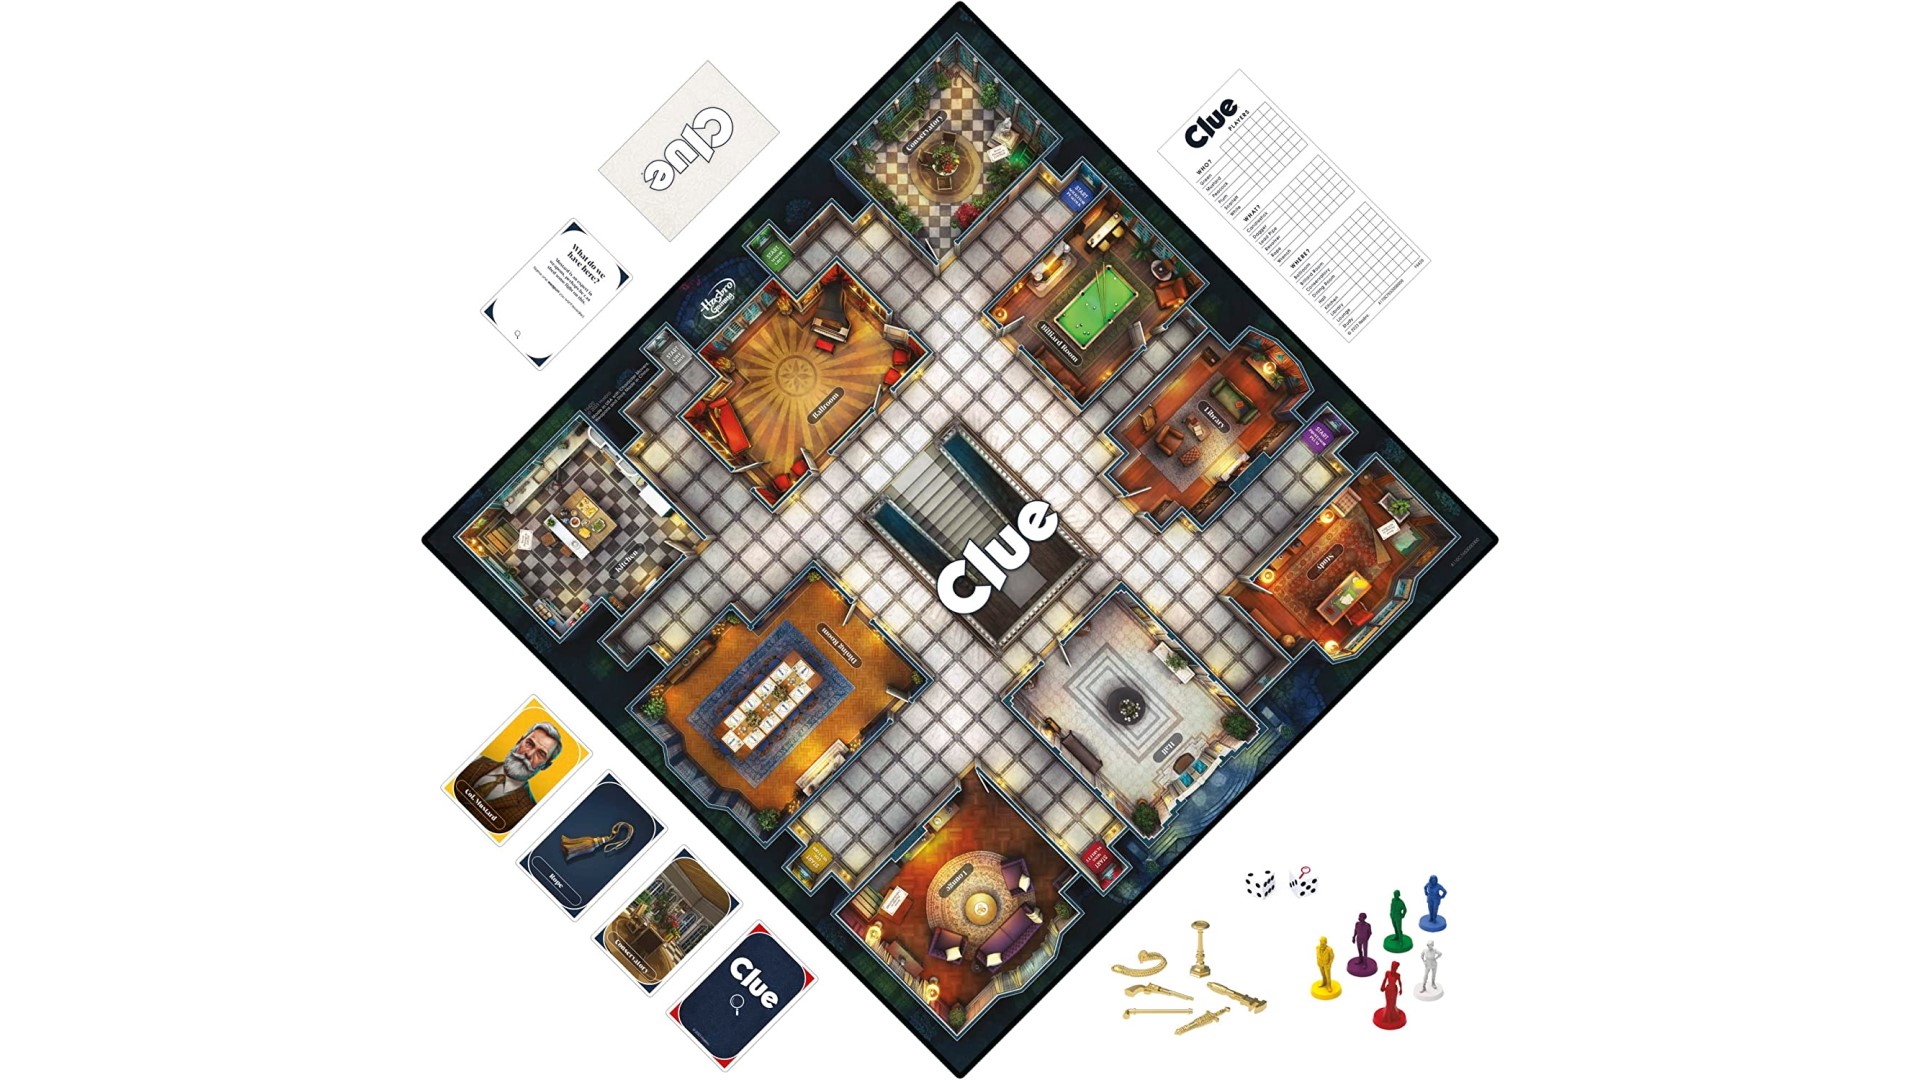 How to Play Clue (Cluedo): Board Game Rules & Setup